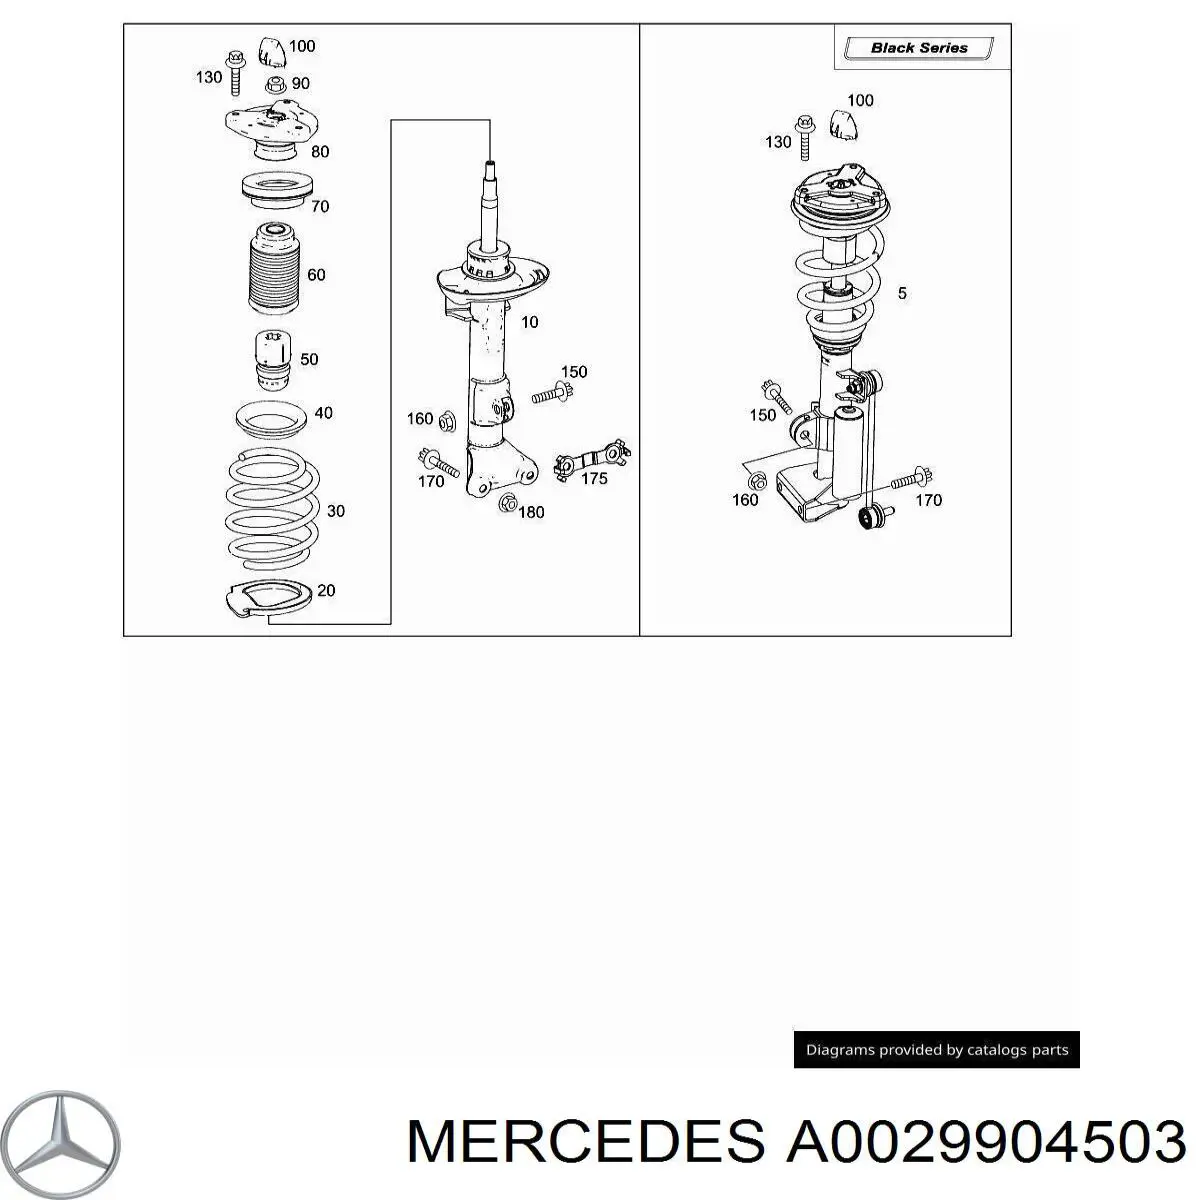 0029904503 Mercedes